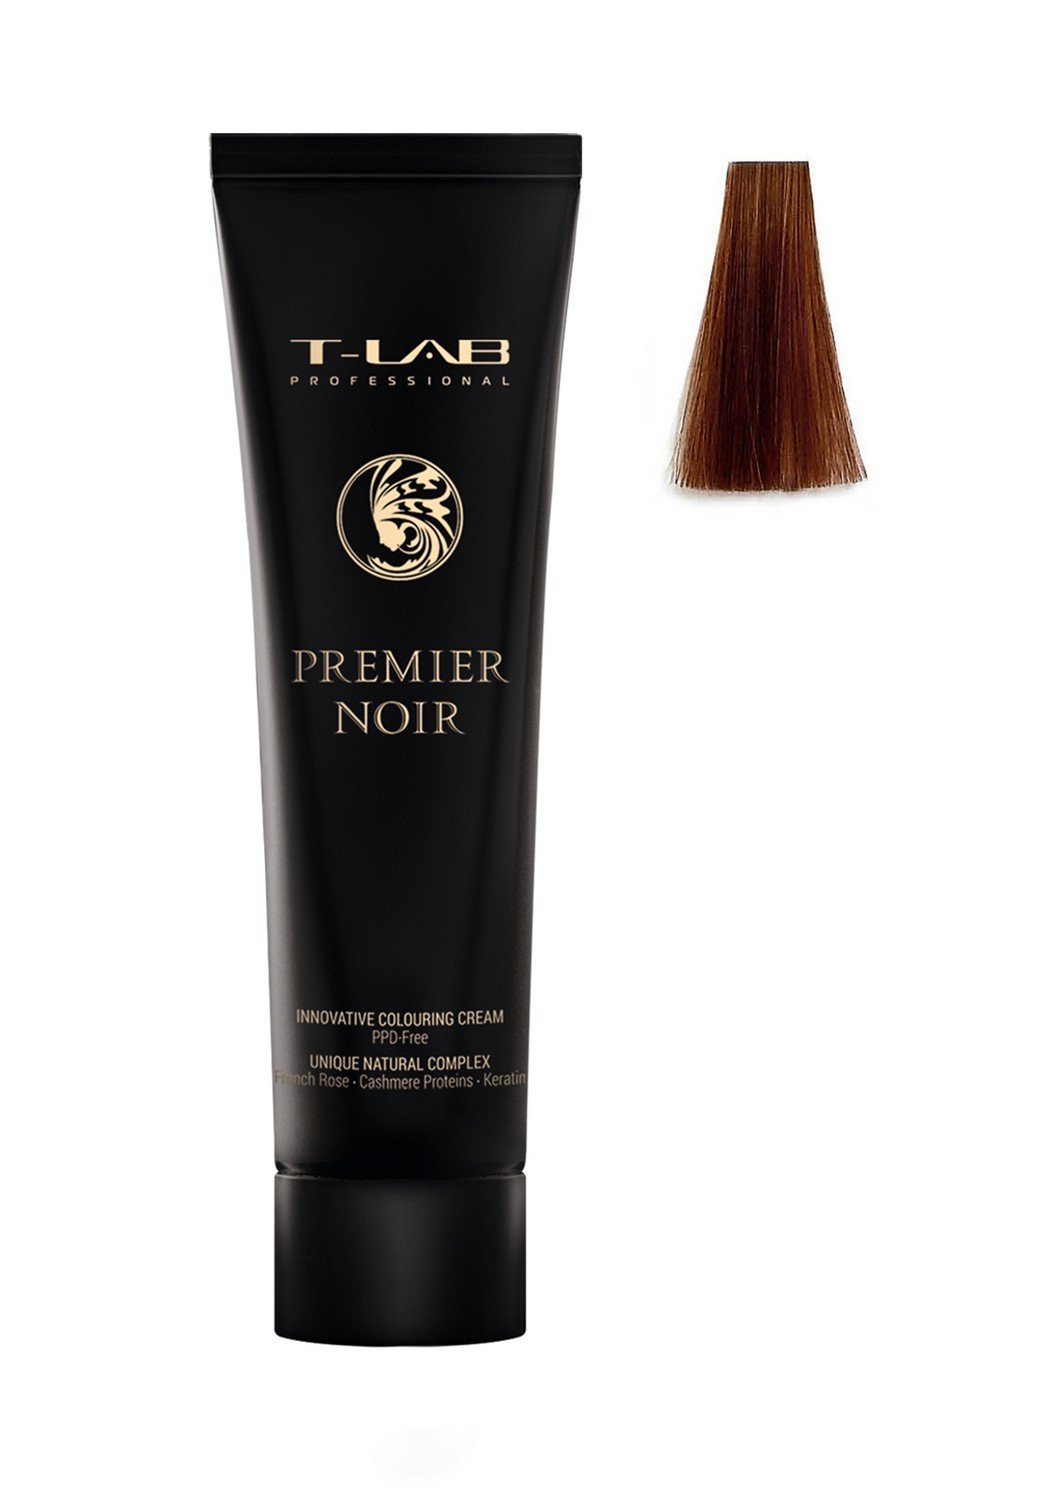 Крем-краска T-LAB Professional Premier Noir colouring cream, оттенок 8.42 (light copper iridescent blonde) - фото 2